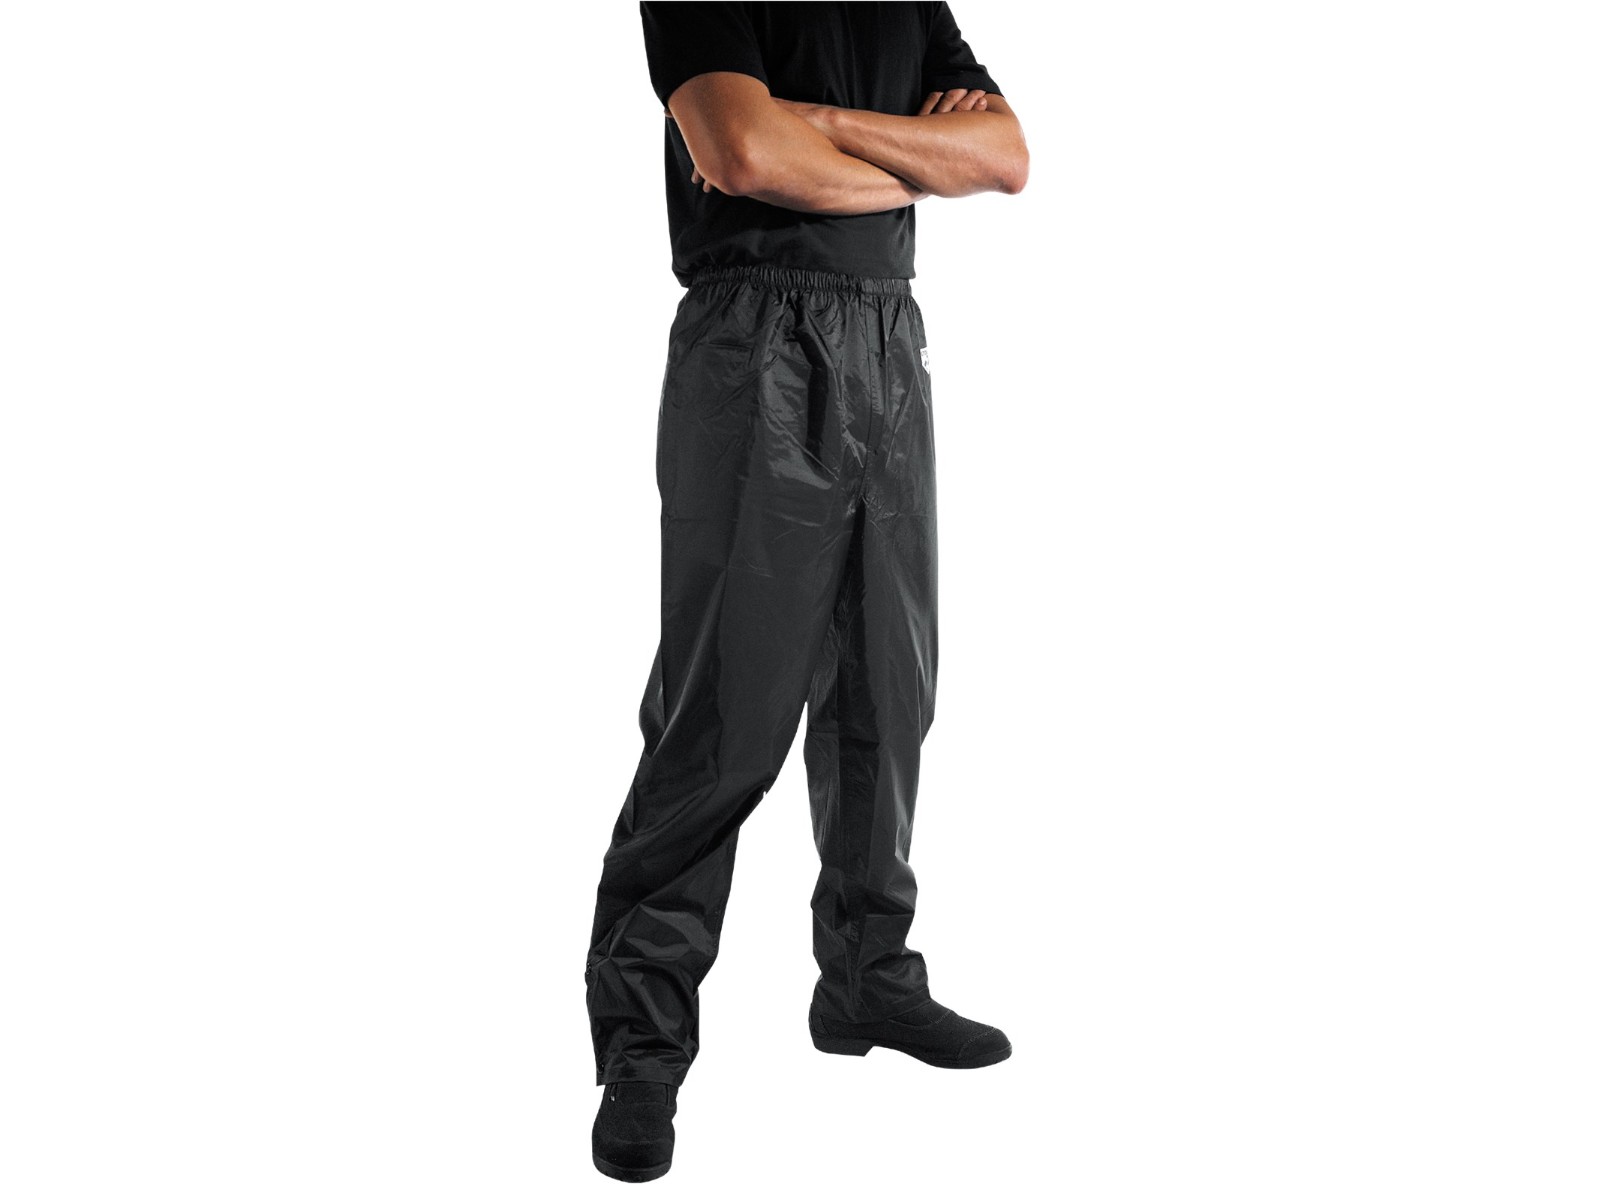 XL LANG Difi Regenhose Delta schwarz Regenschutz Regenbekleidung Hose 